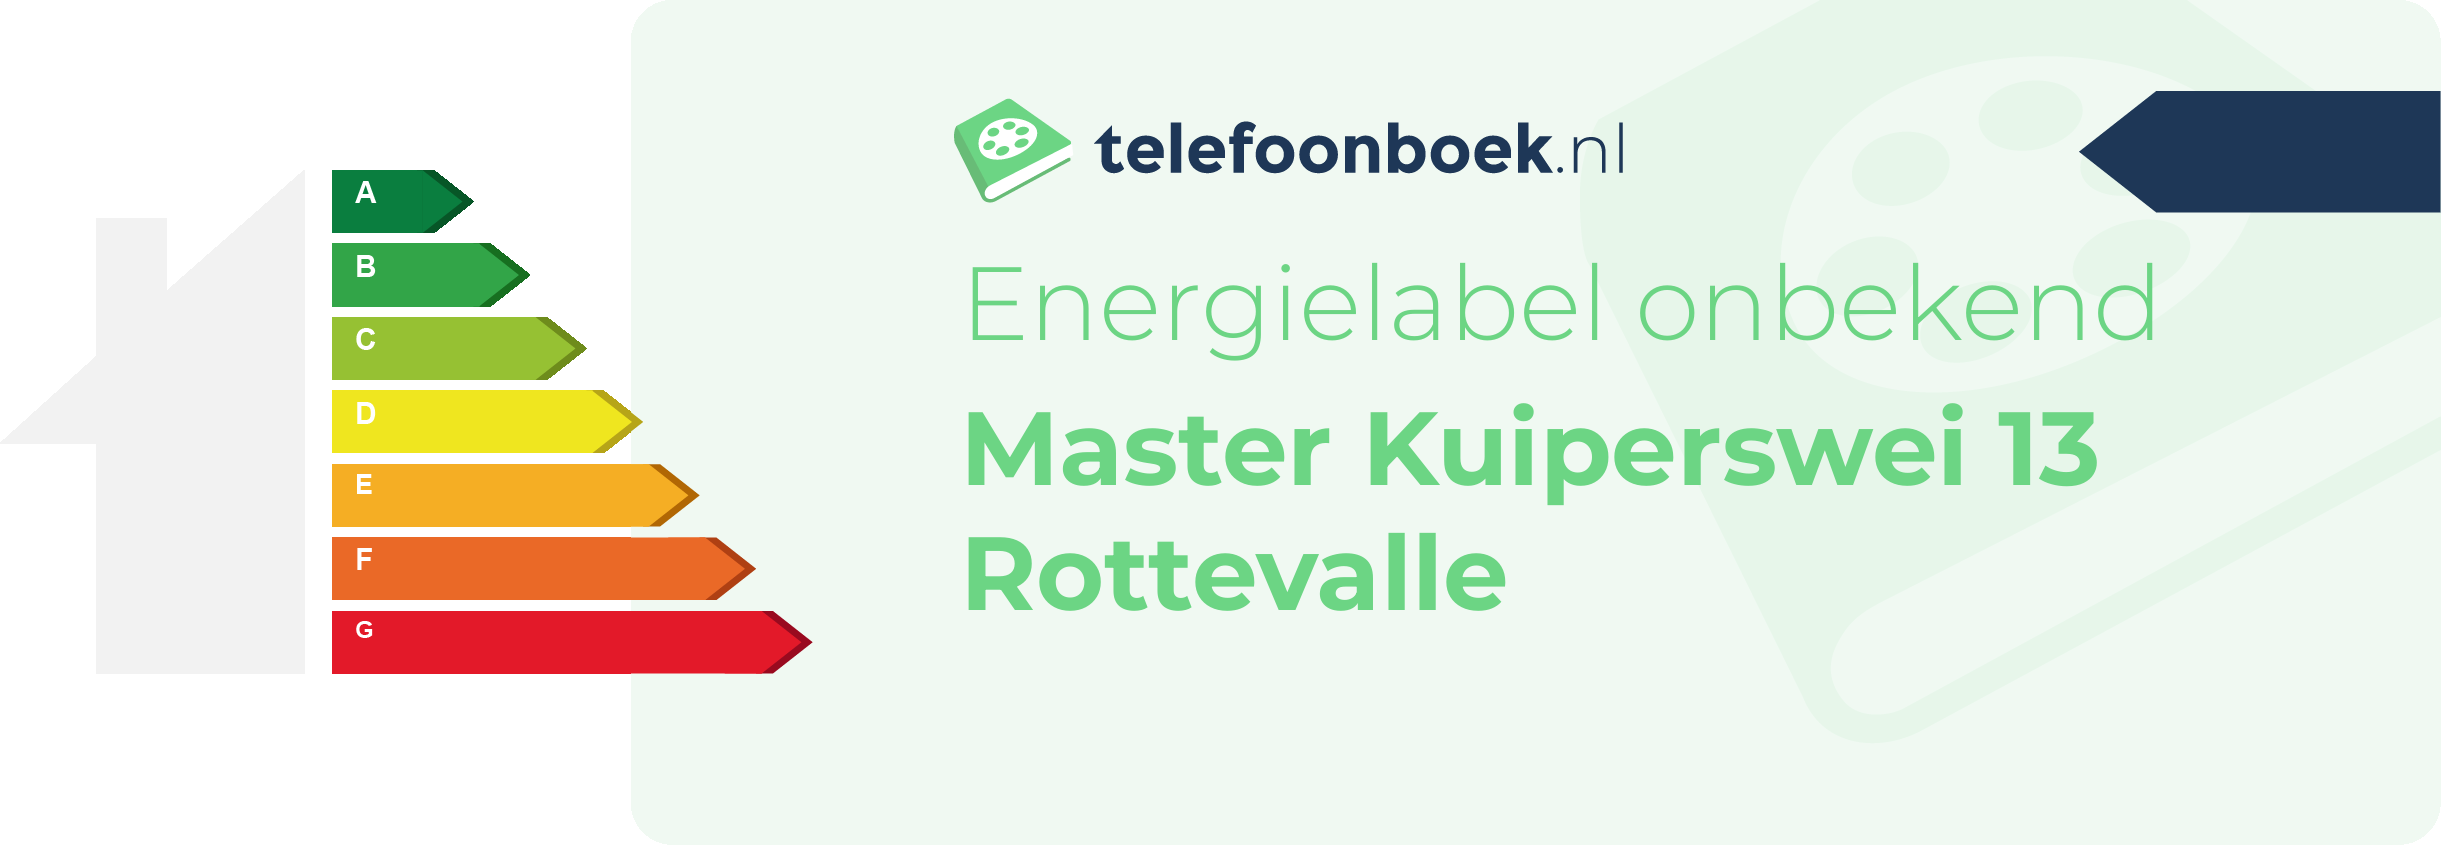 Energielabel Master Kuiperswei 13 Rottevalle